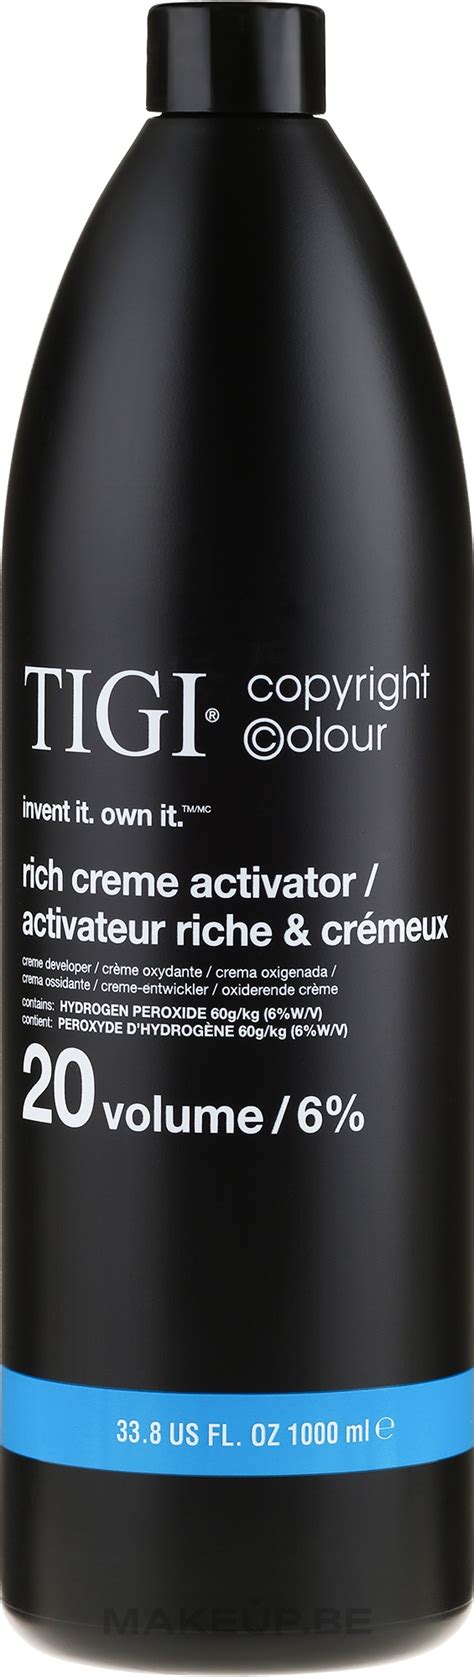 Tigi Colour Activator Vol Cr Me Oxydante Makeup Be